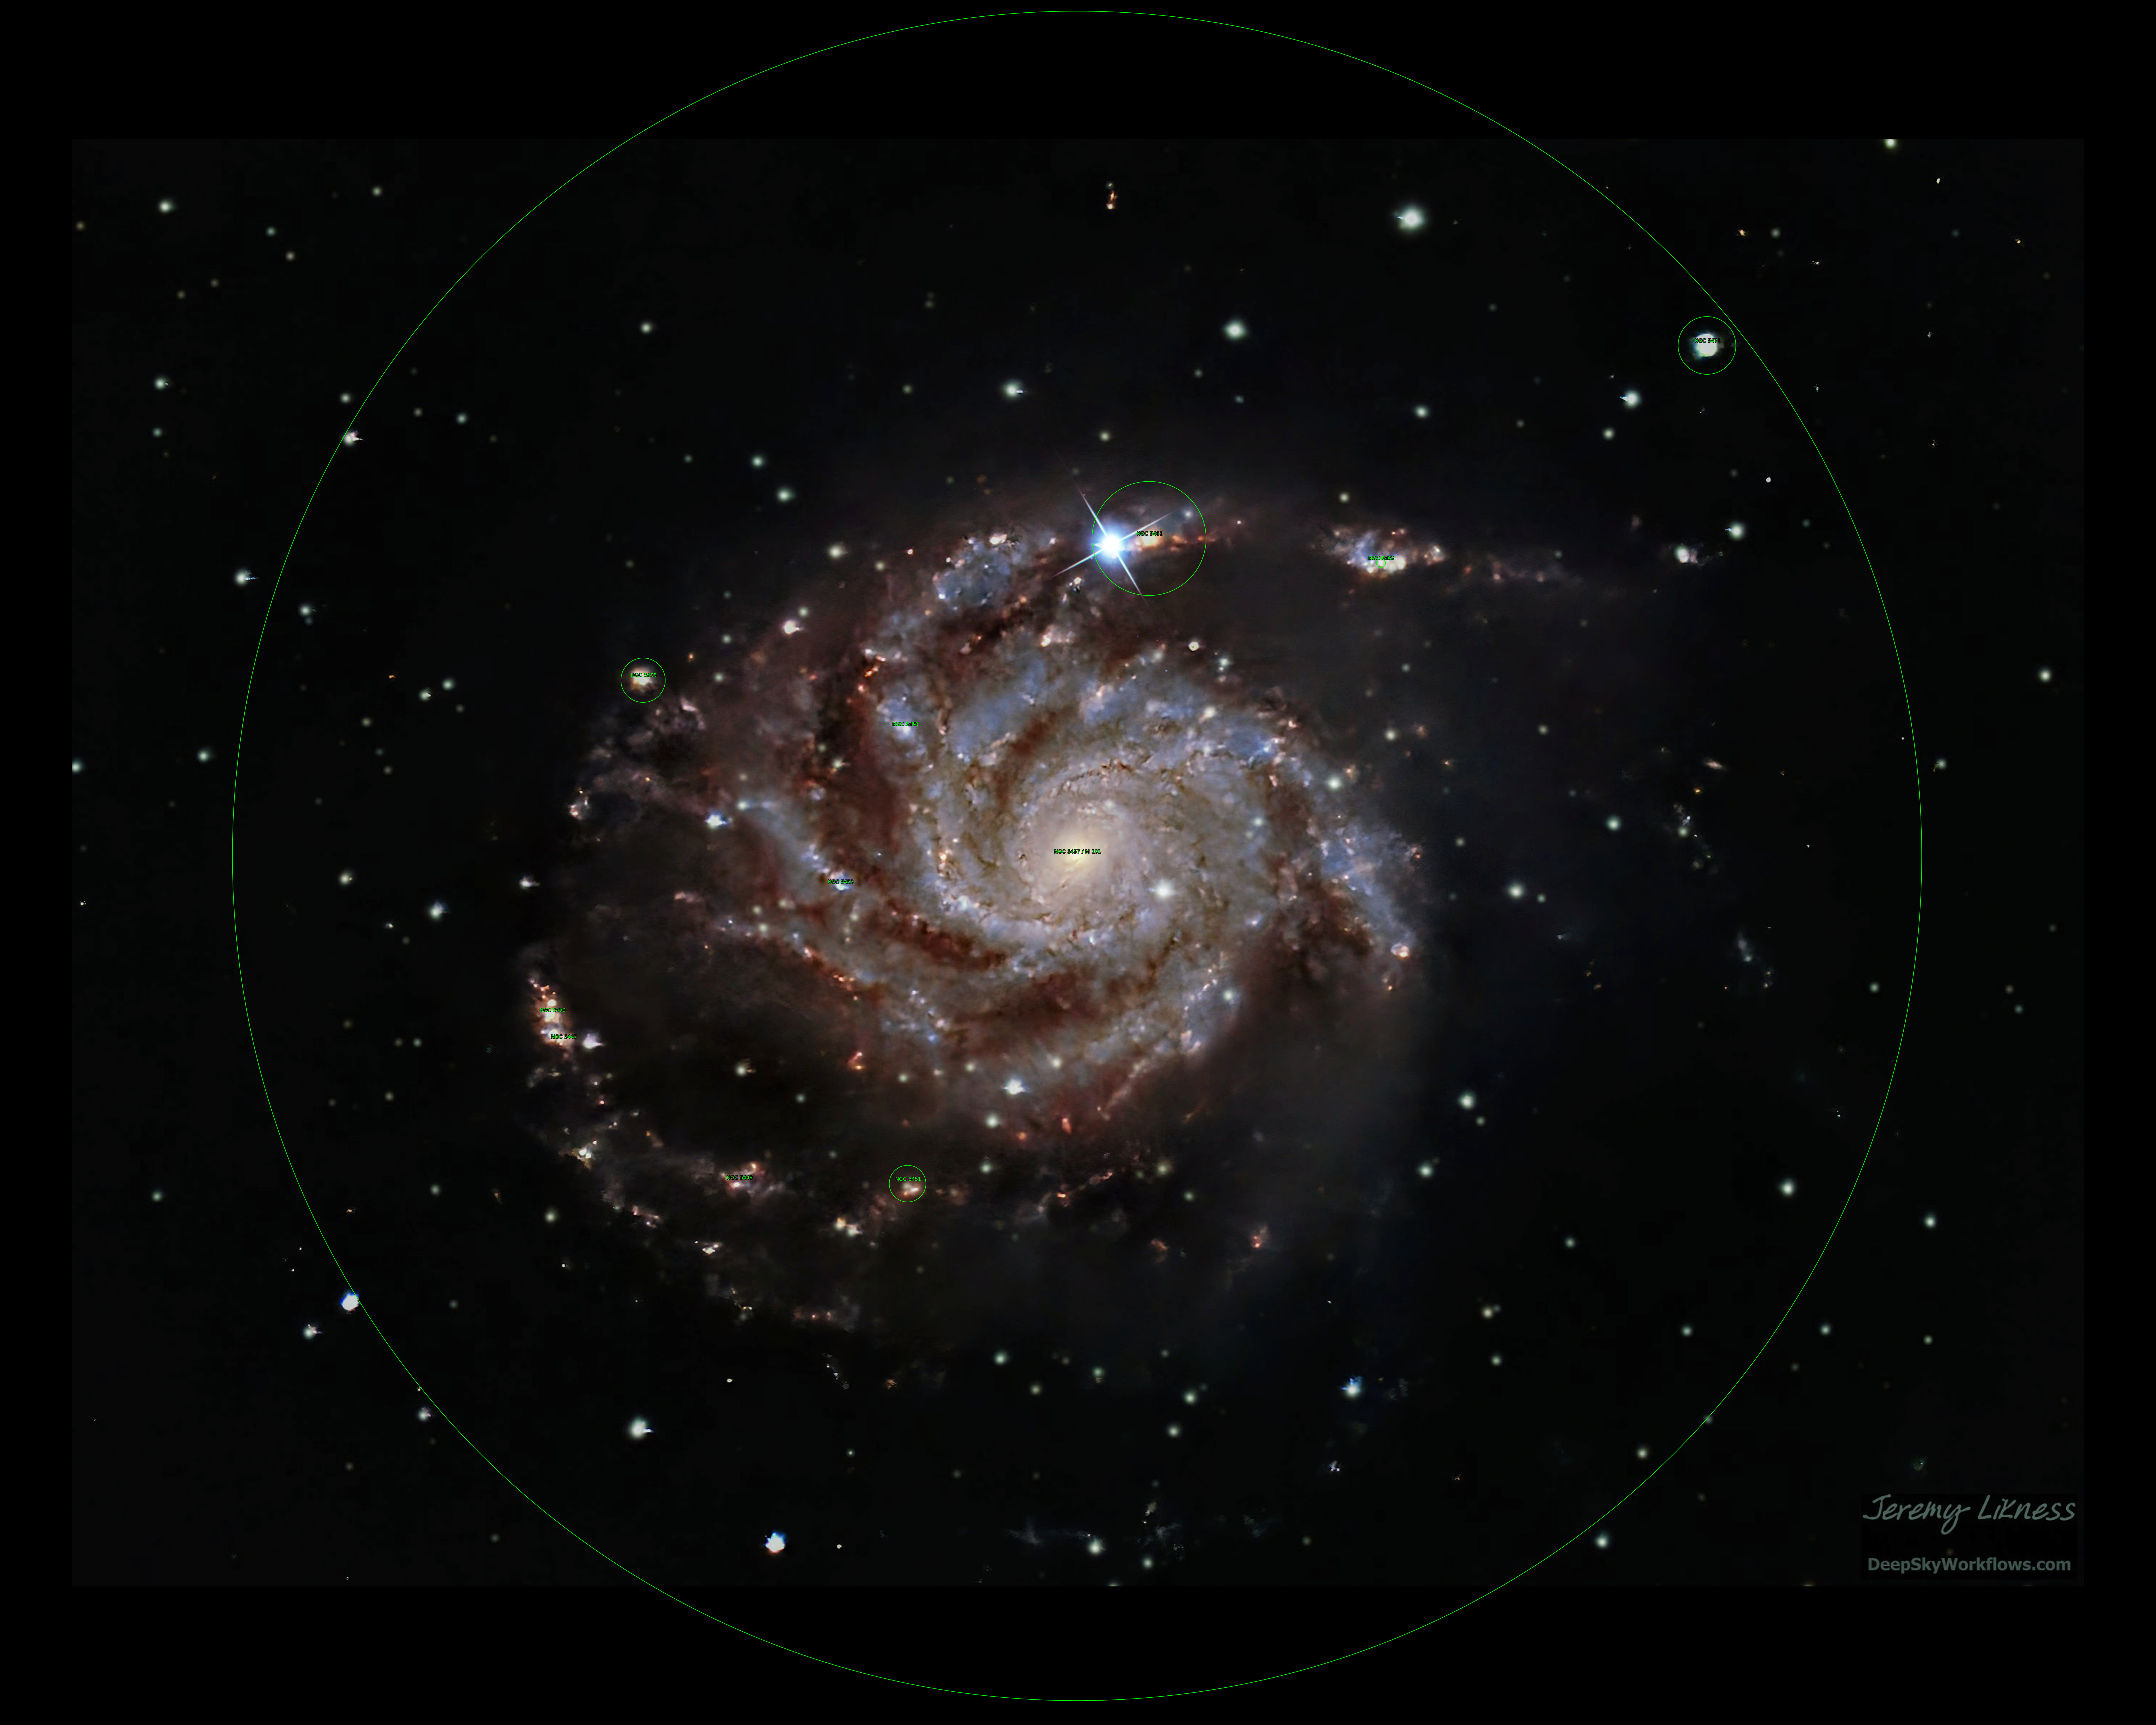 Buy a photo print : Messier 101, the Pinwheel galaxy